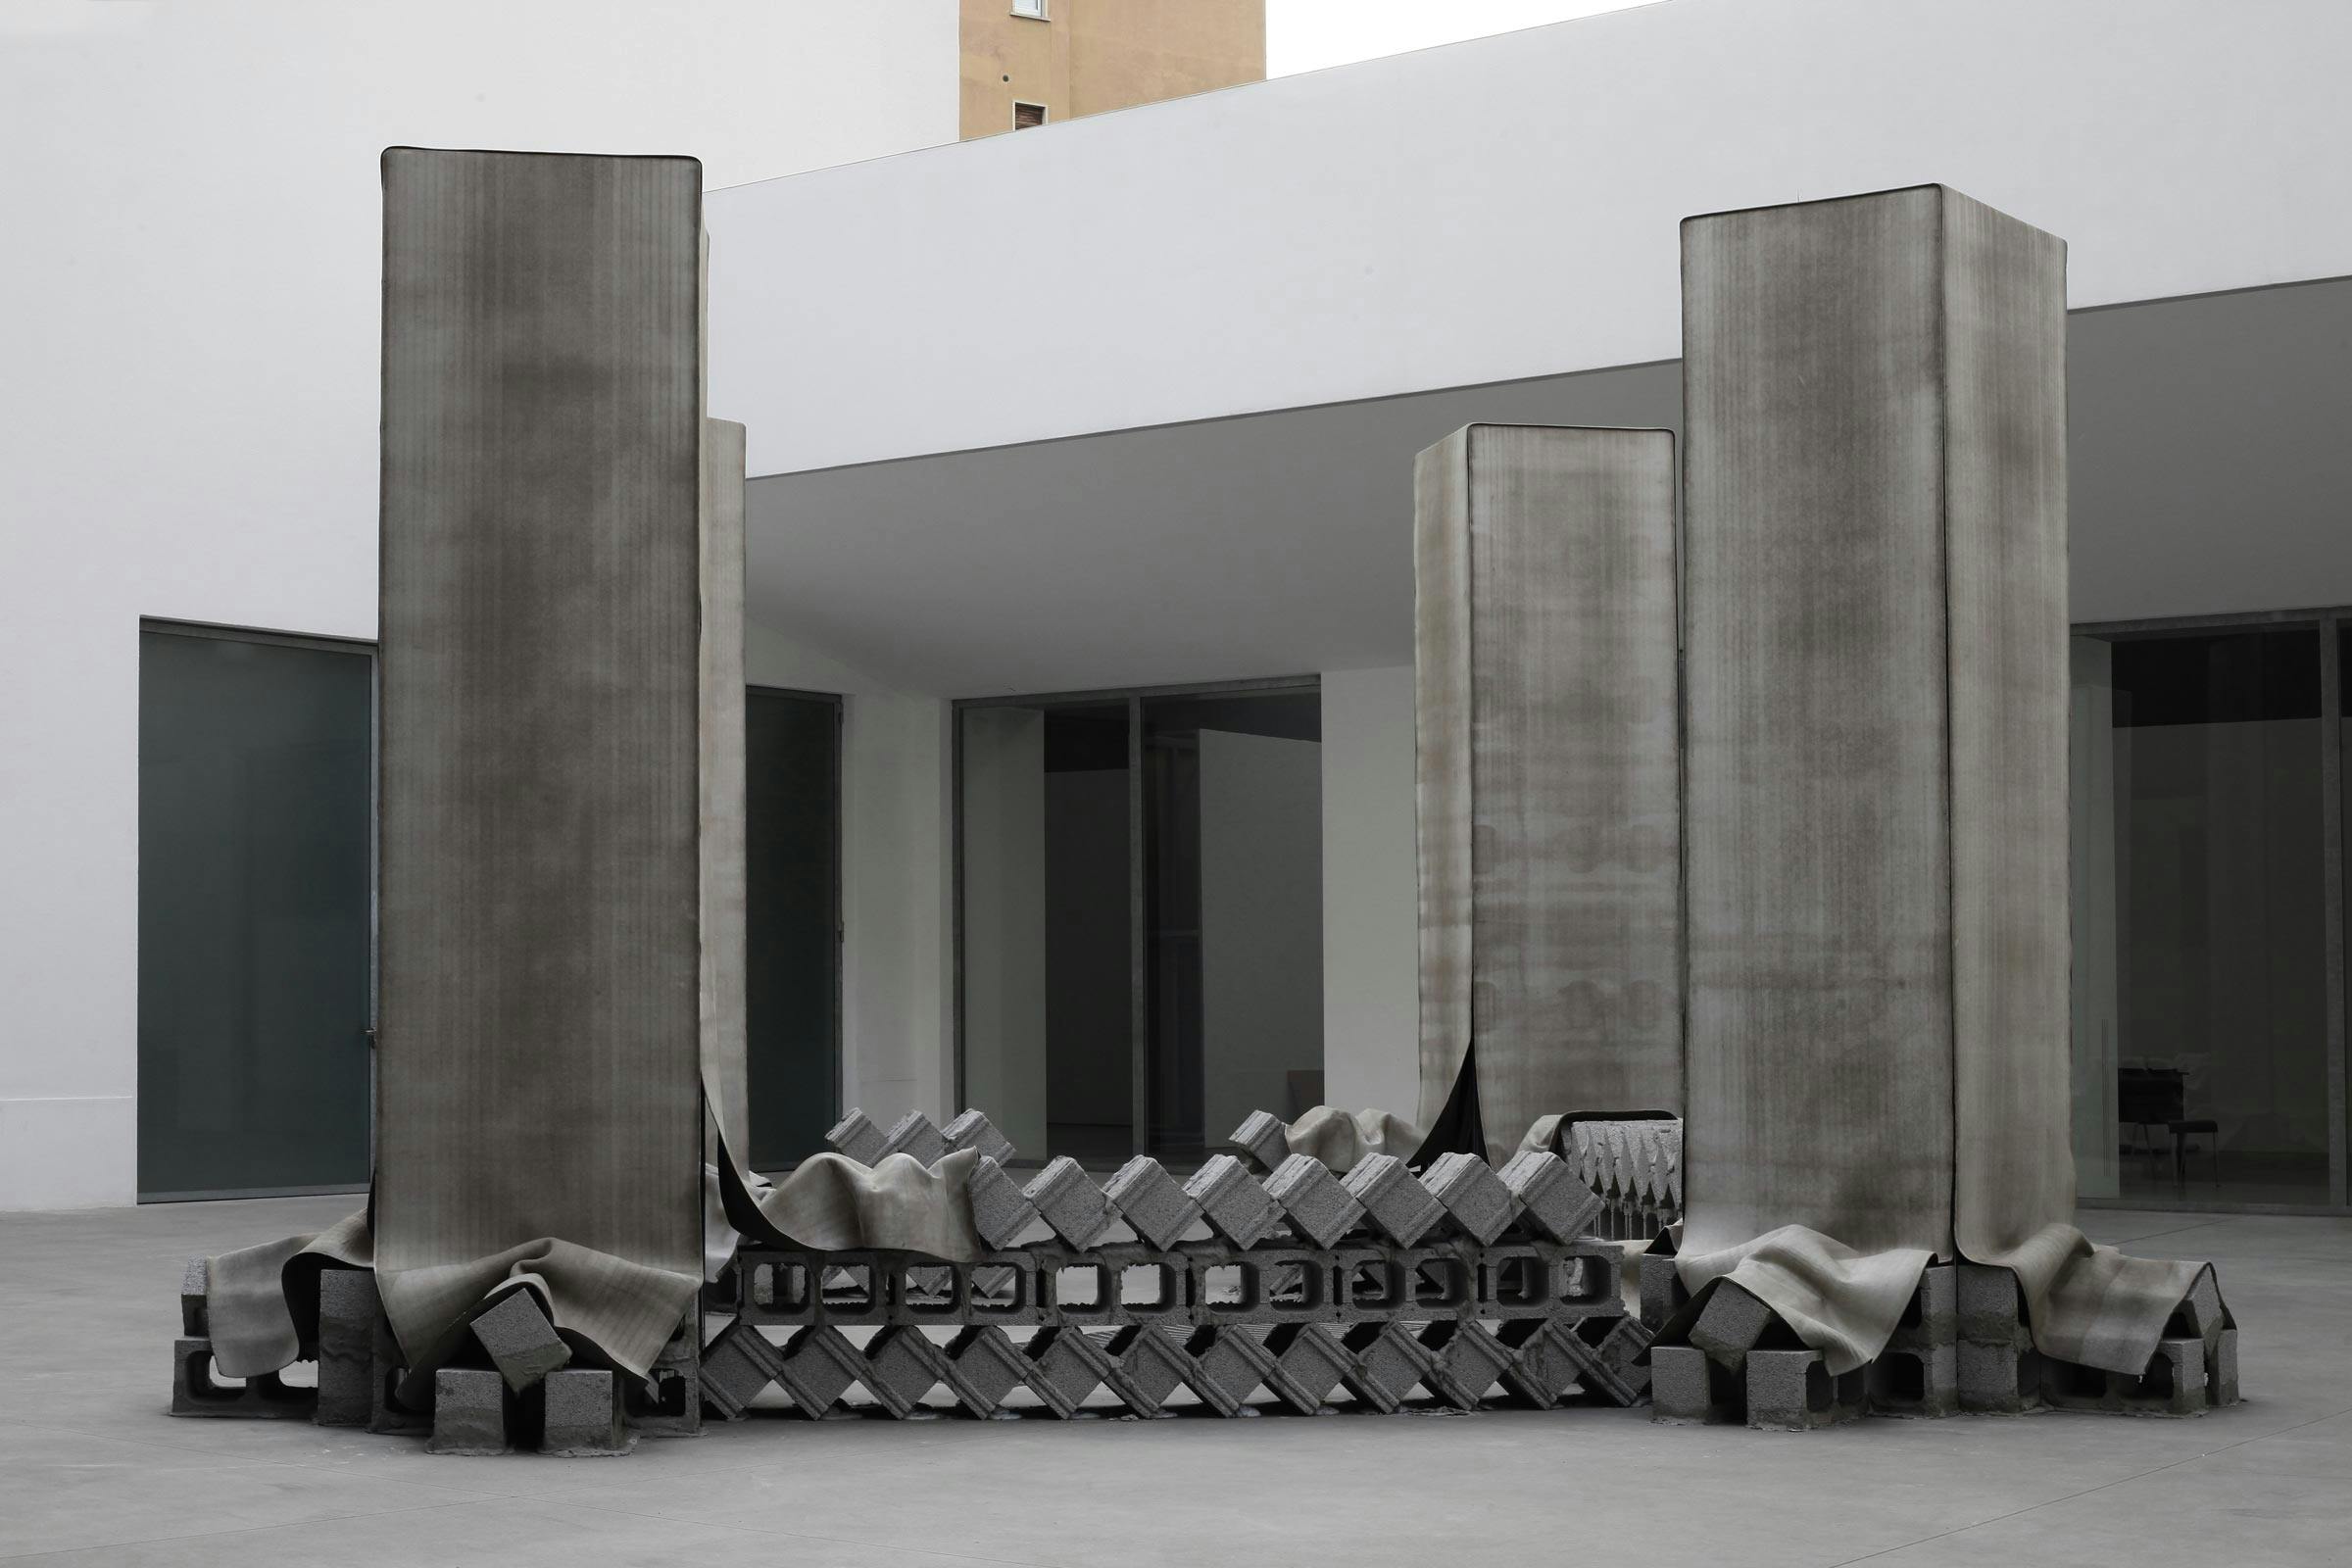 Marc Leschelier's Cement and Cinderblock Outdoor Installation 'Demon' at Spazio Maiocchi in Milan, Italy, 2022